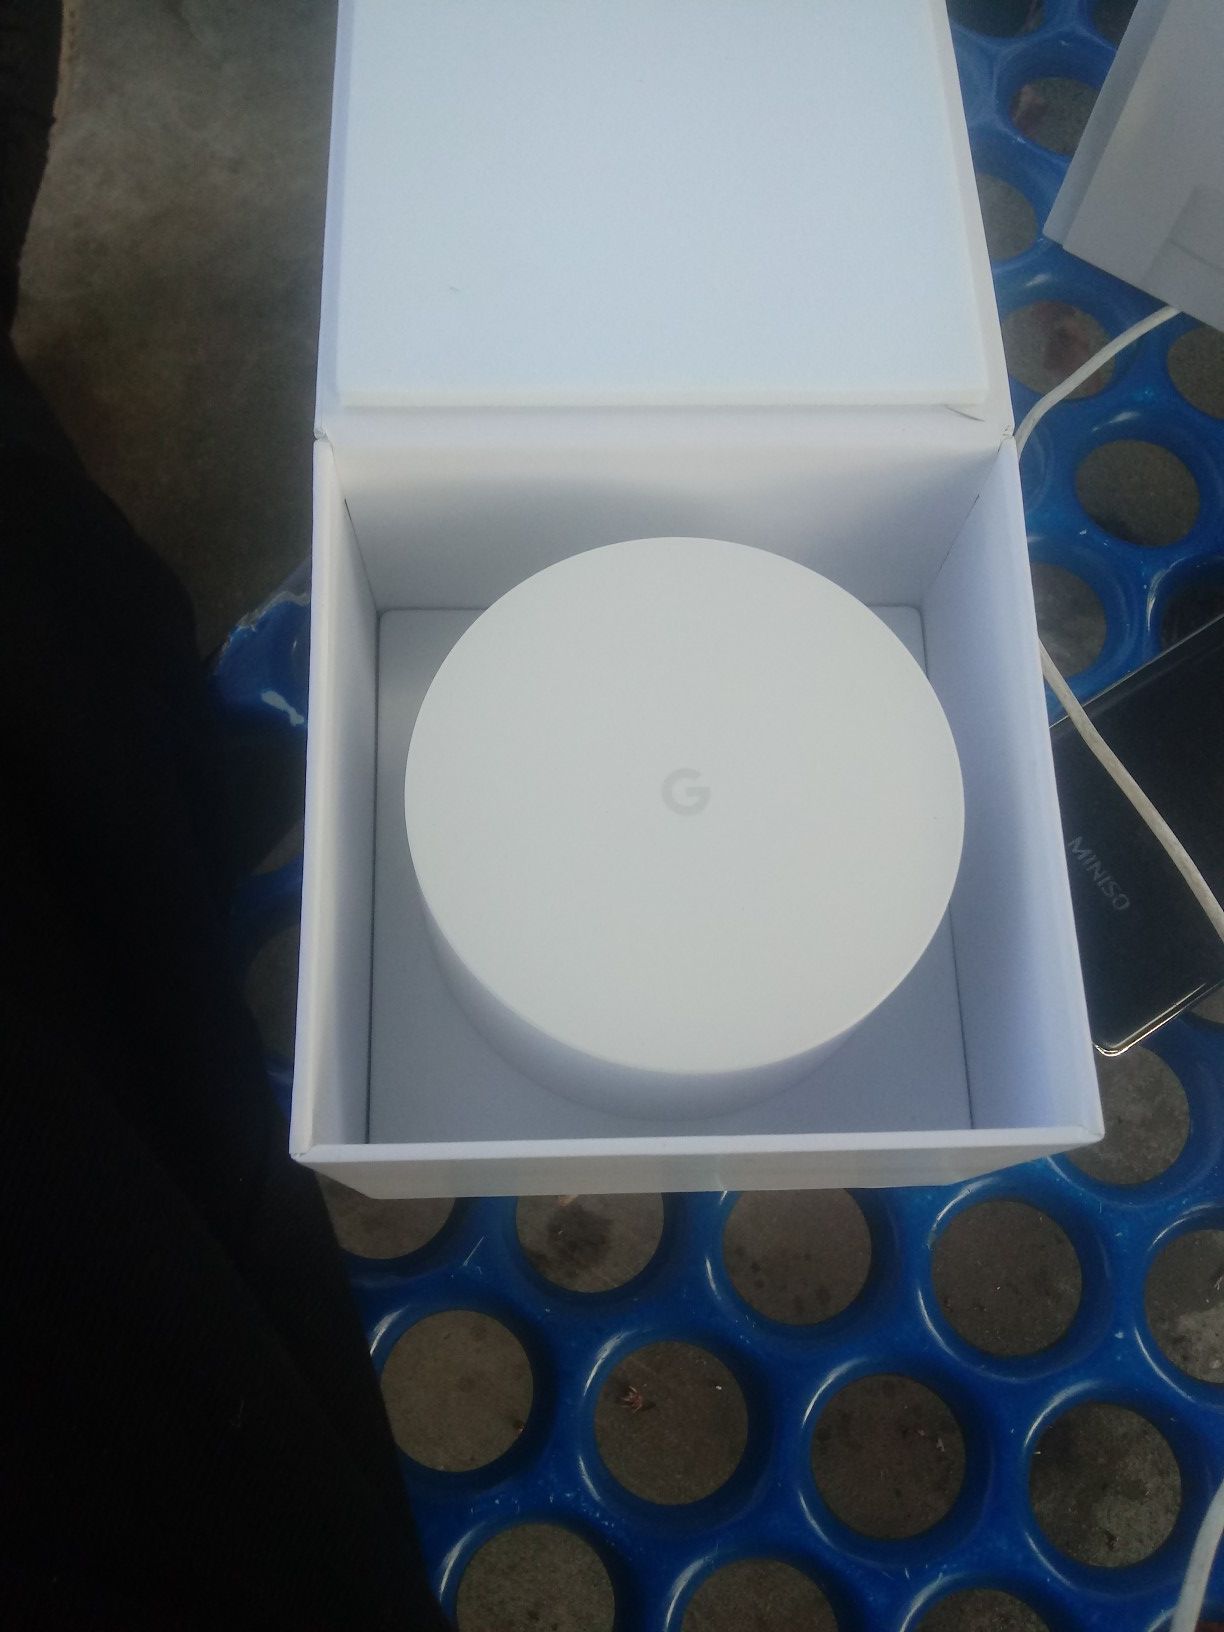 1 Google WiFi System